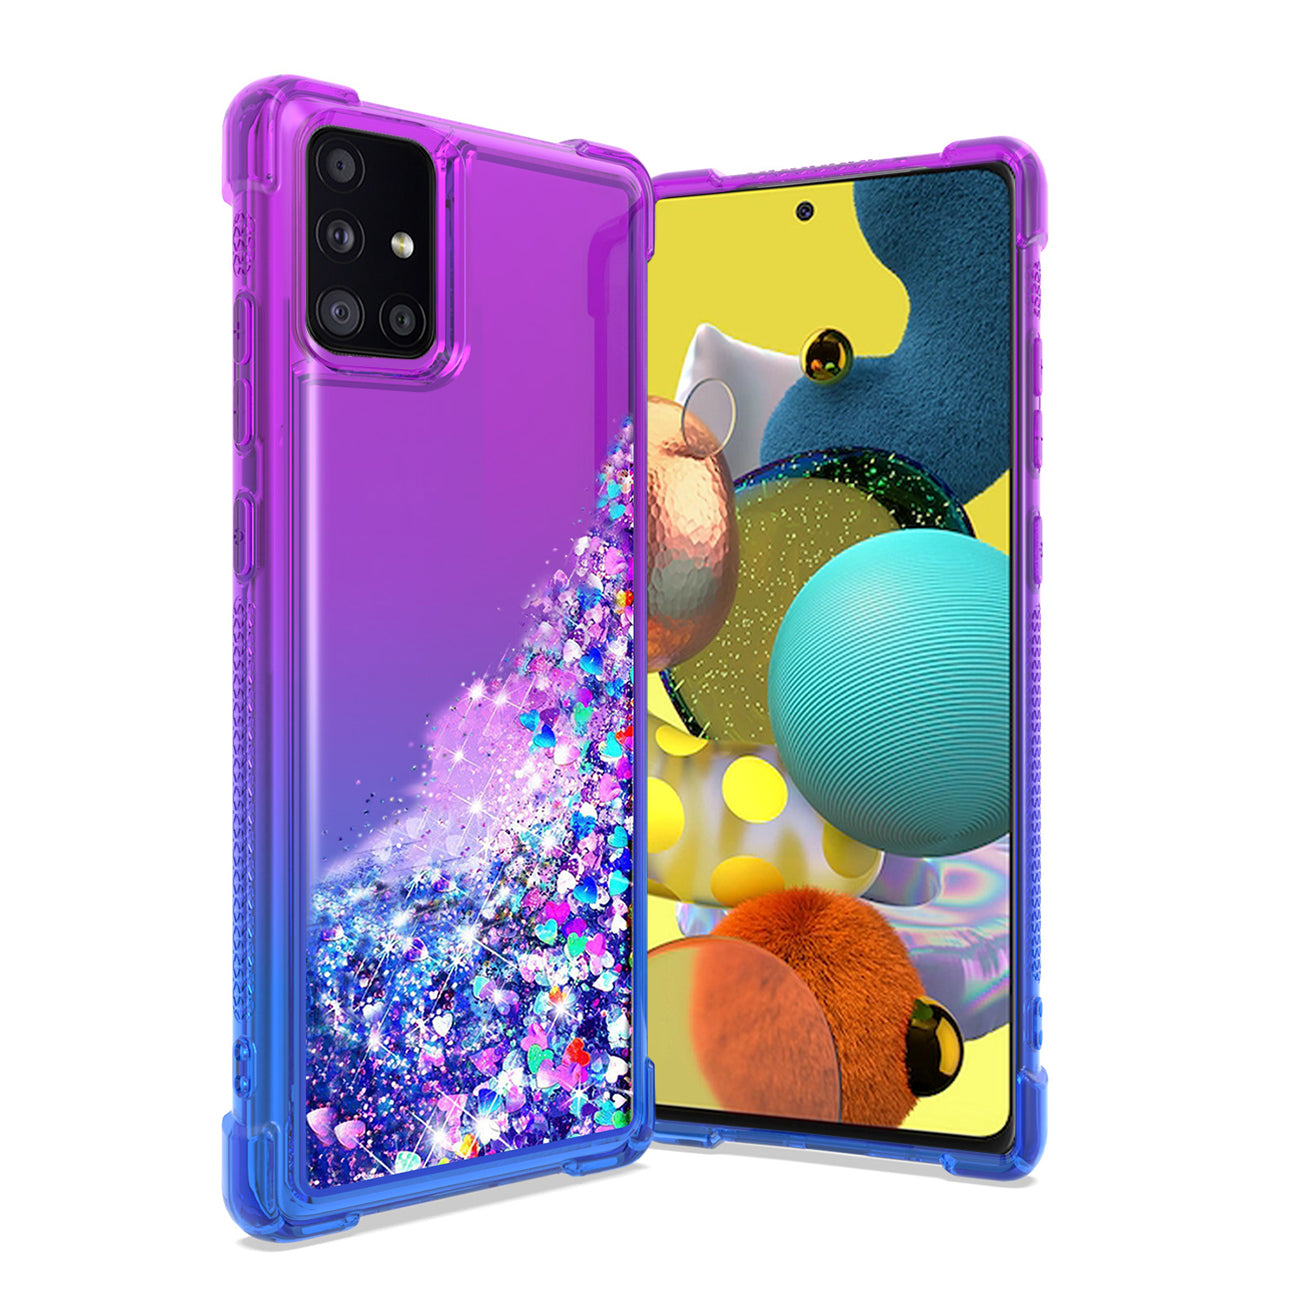 Case Bumper Shiny Flowing Glitter Liquid Samsung Galaxy A51 5G Purple Color